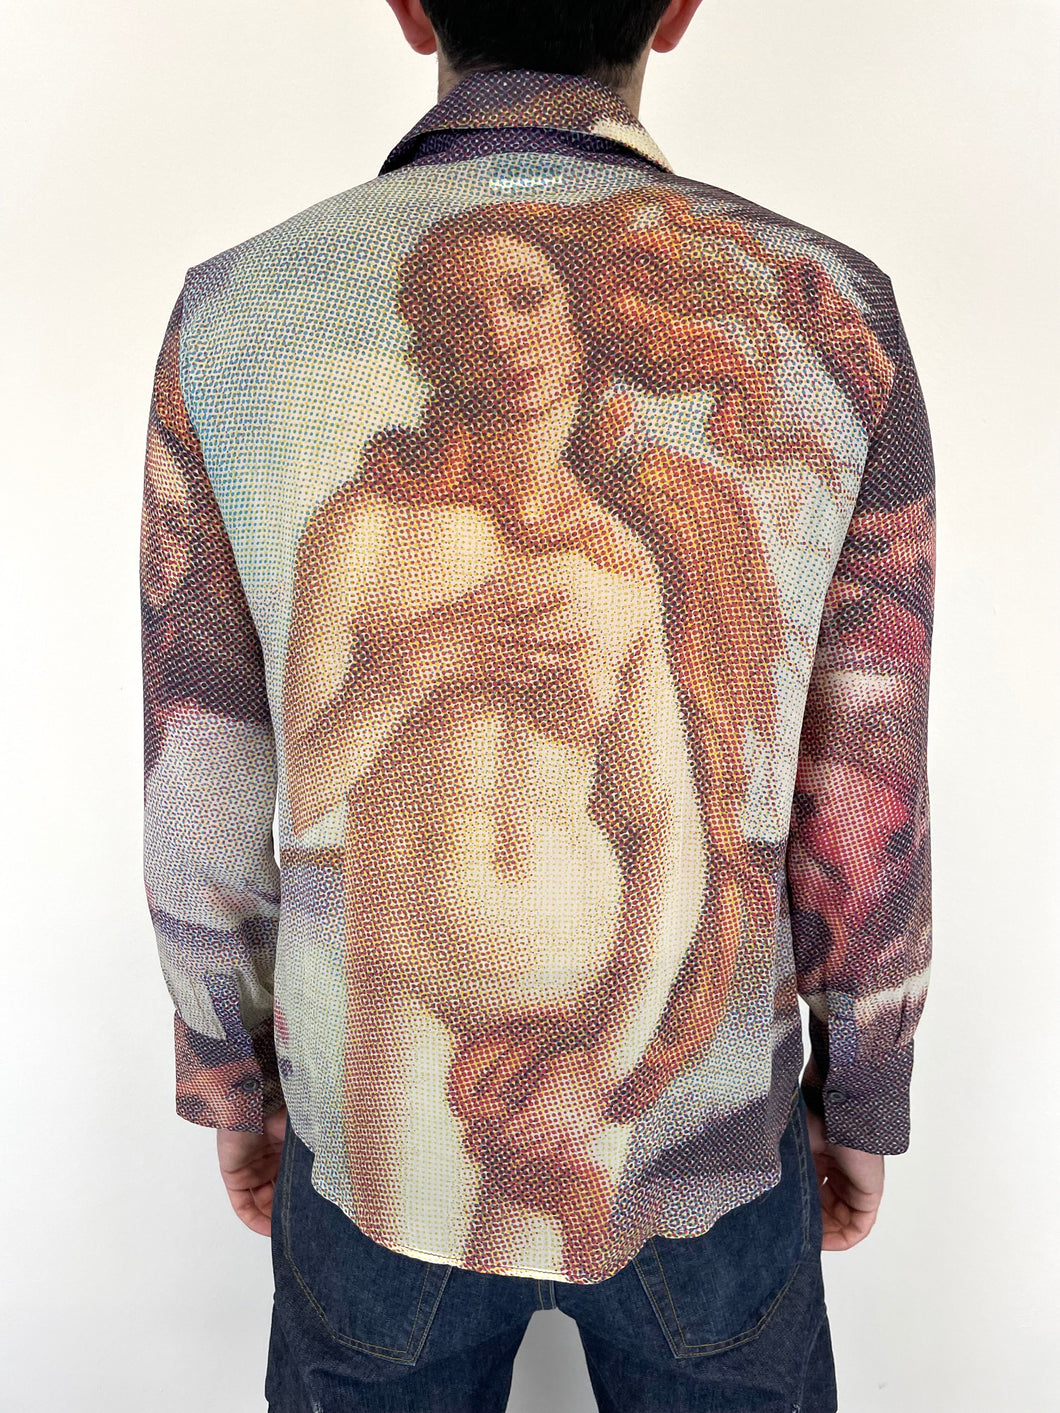 1990s D&G Botticelli Birth of Venus pointillism painting shirt